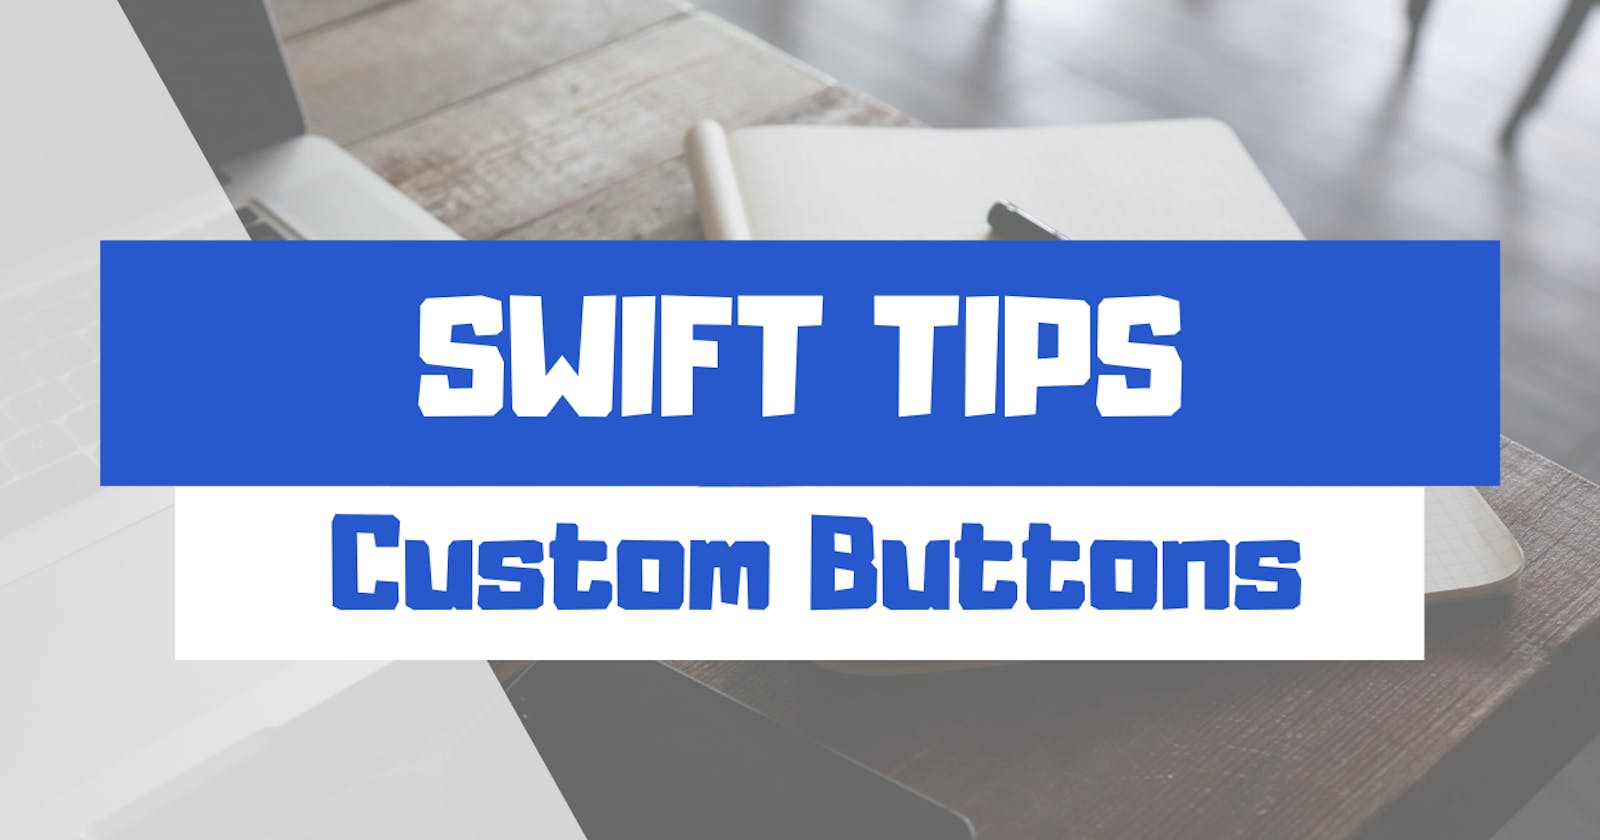 Creating Custom Button Styles